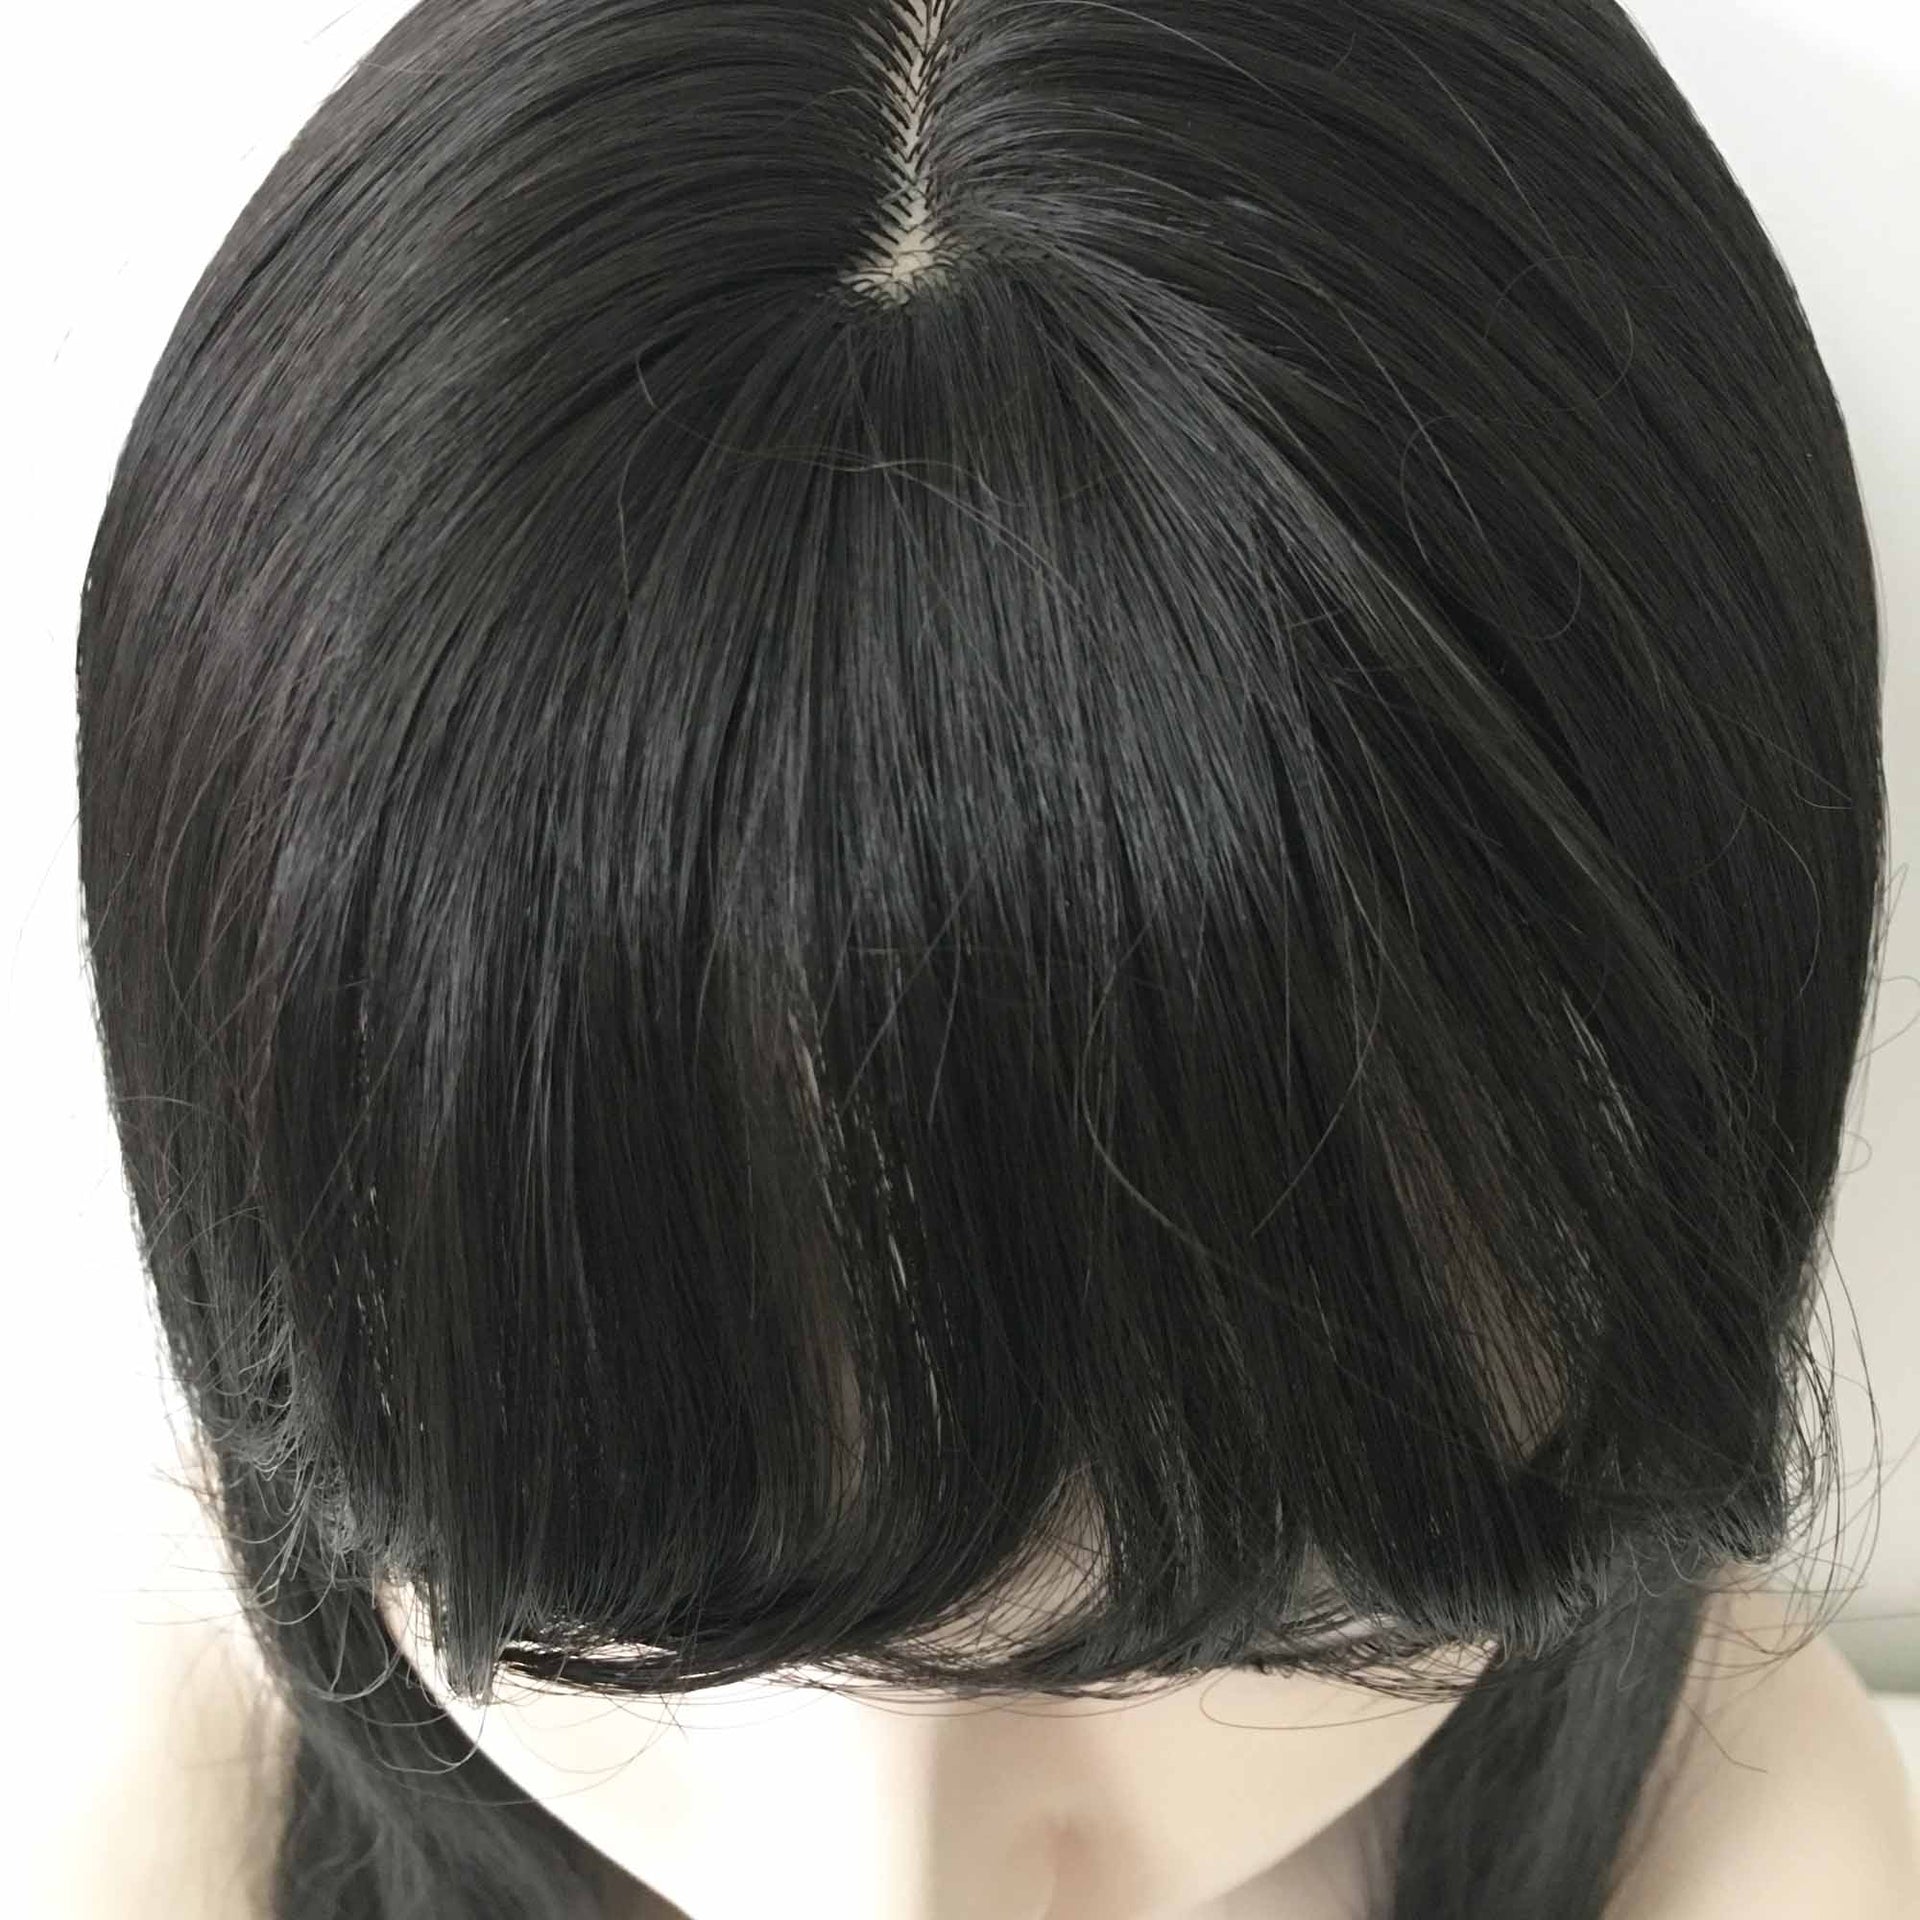 nevermindyrhead Women Black Medium Length Straight Blunt Cut Fringe Bangs Wig